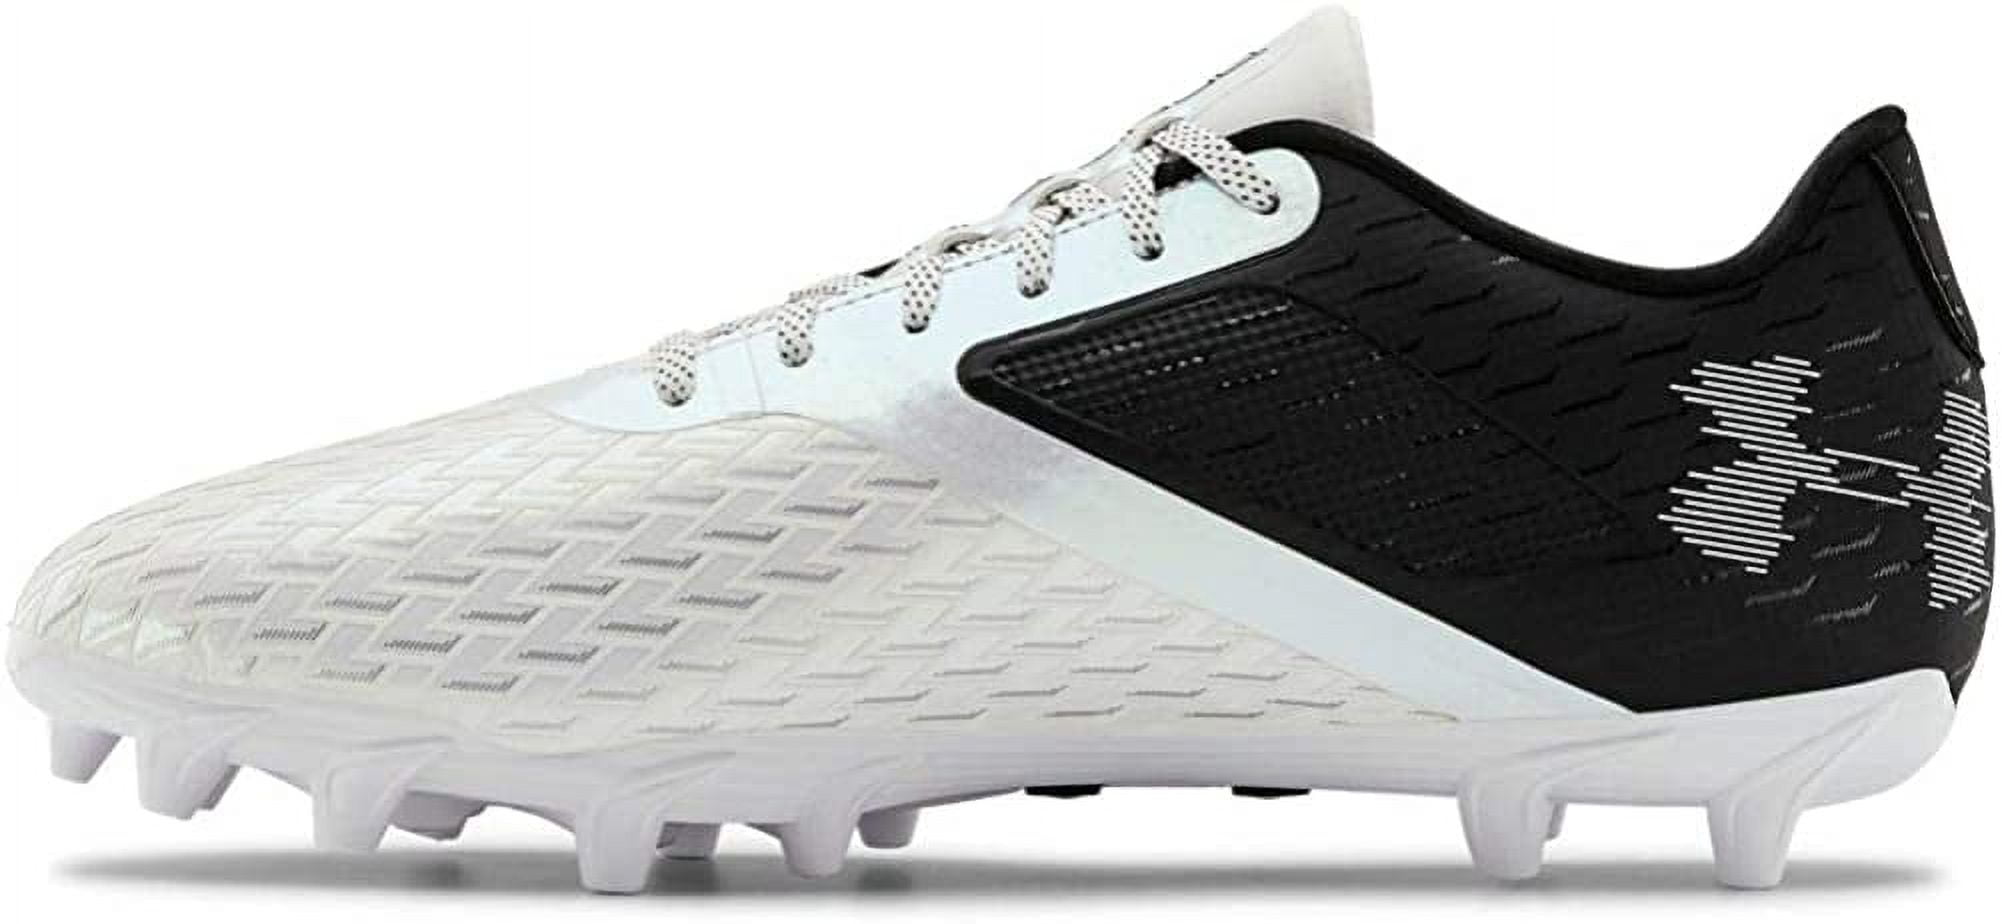 Under Armour mens Blur Select Low Mc Football Shoe, Black/White, 9.5 US